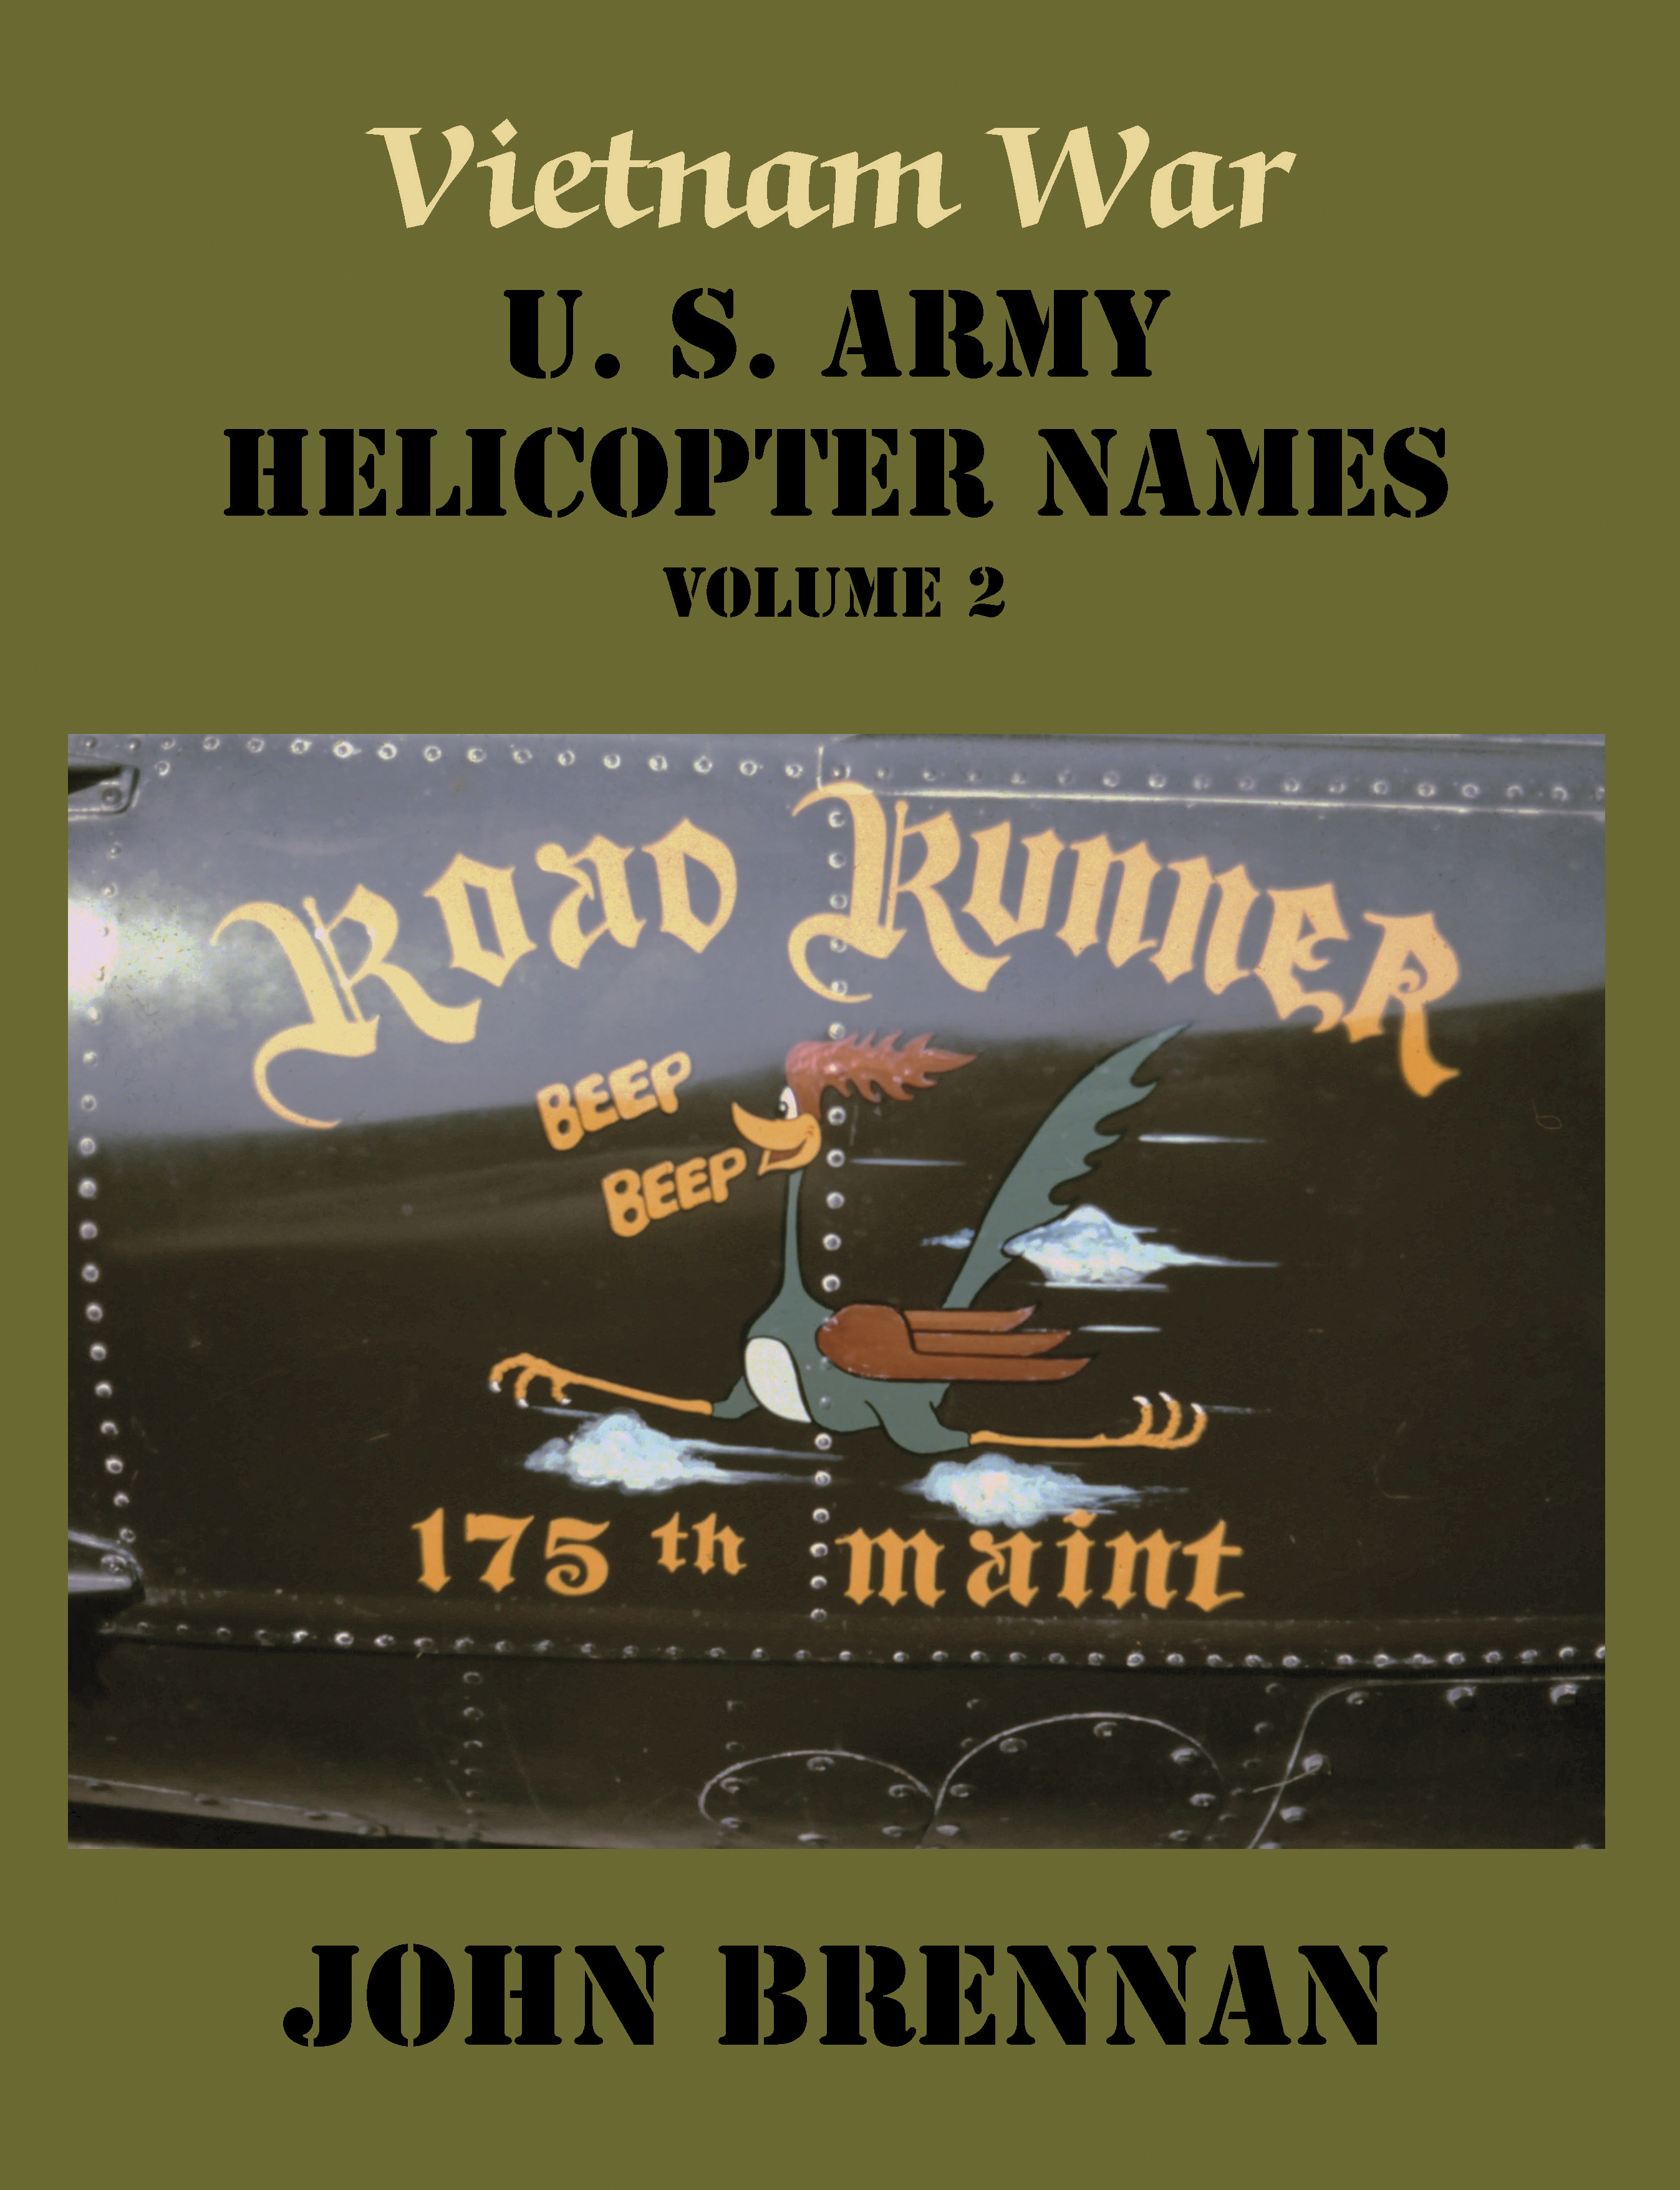 Vietnam War: U.S. Army Helicopter Names, Vol. 2 by John Brennan